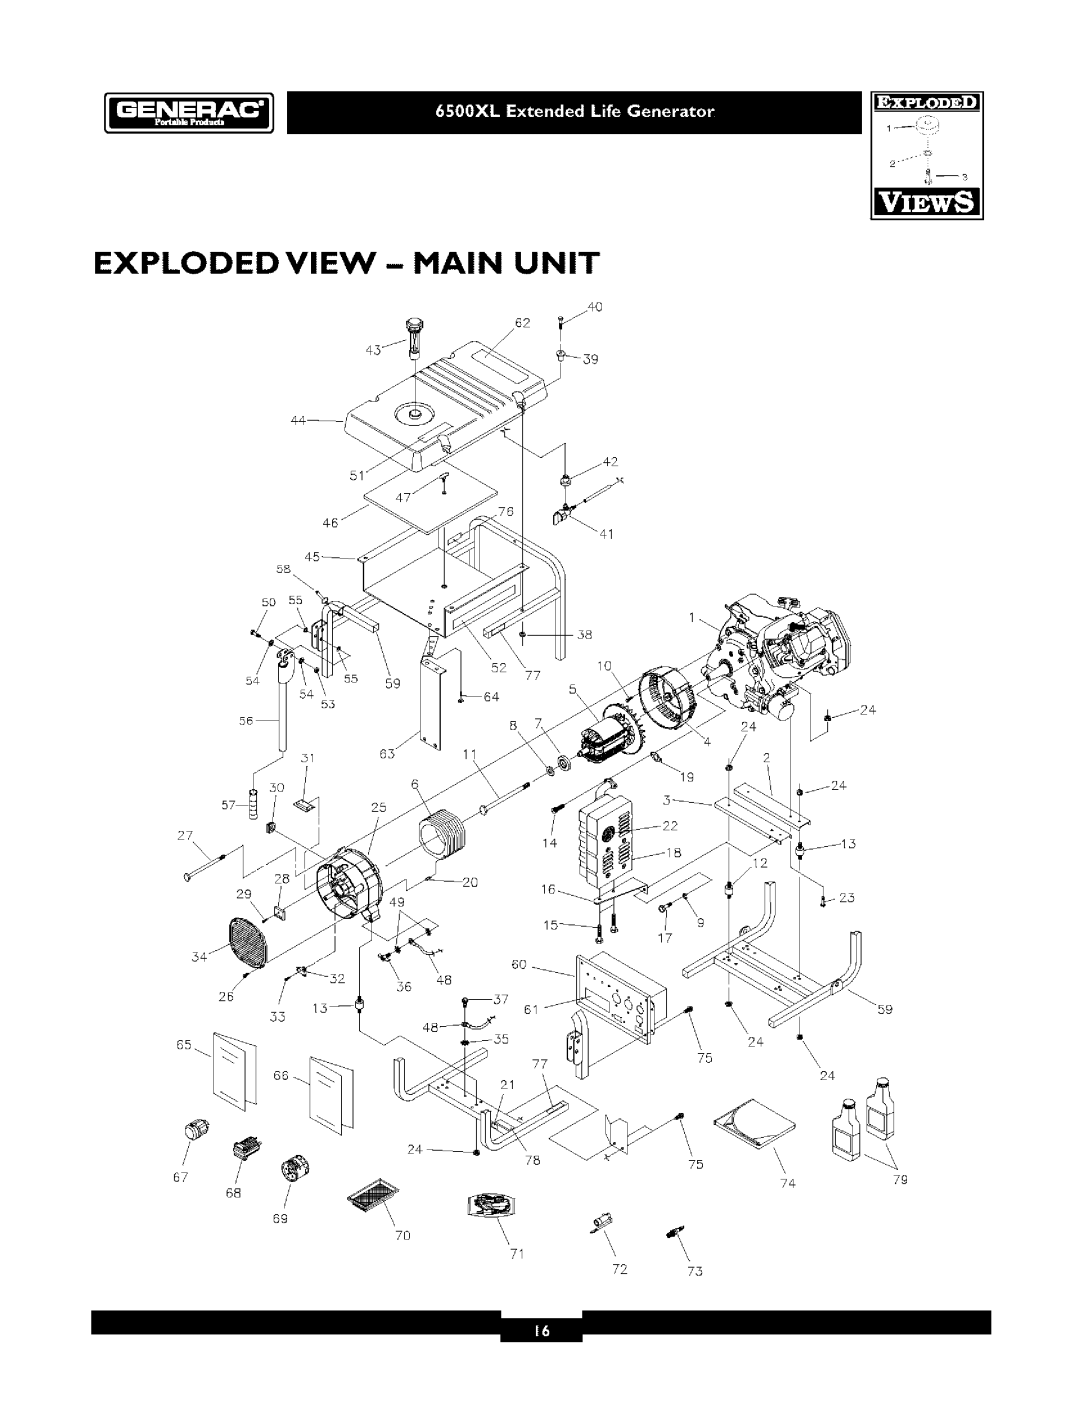 Generac 6500XL owner manual Explodedview- Main Unit, 7273 